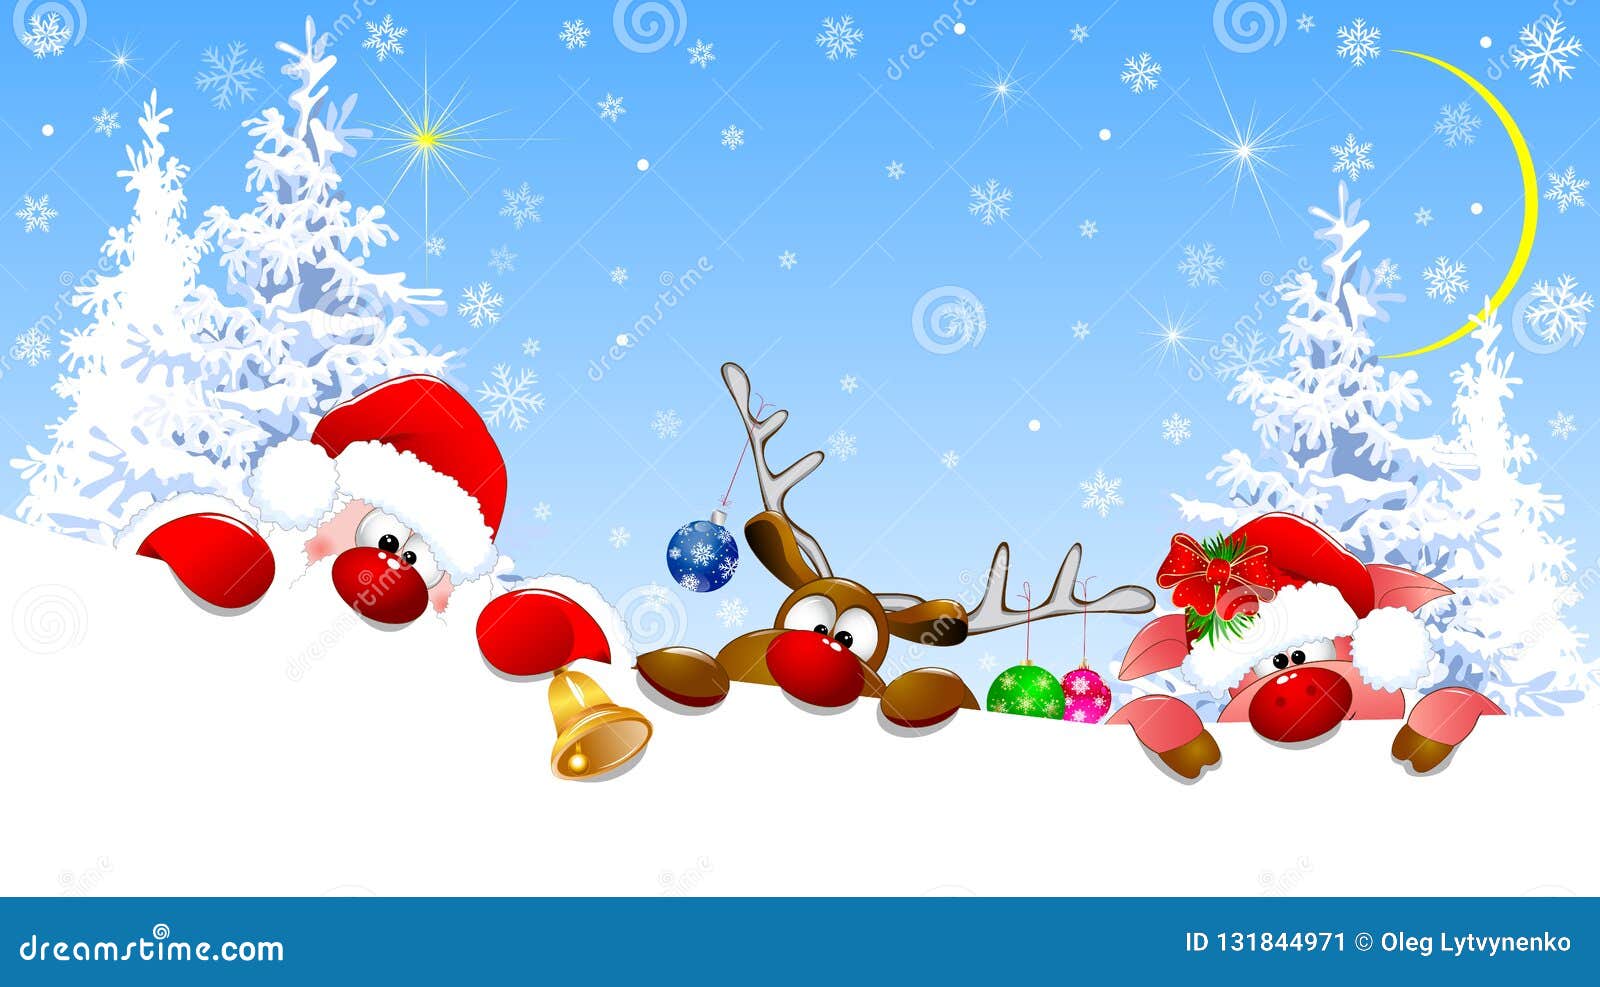 Santa, Deer And Piglet On Christmas Night Stock Vector - Illustration of piggy, card: 131844971